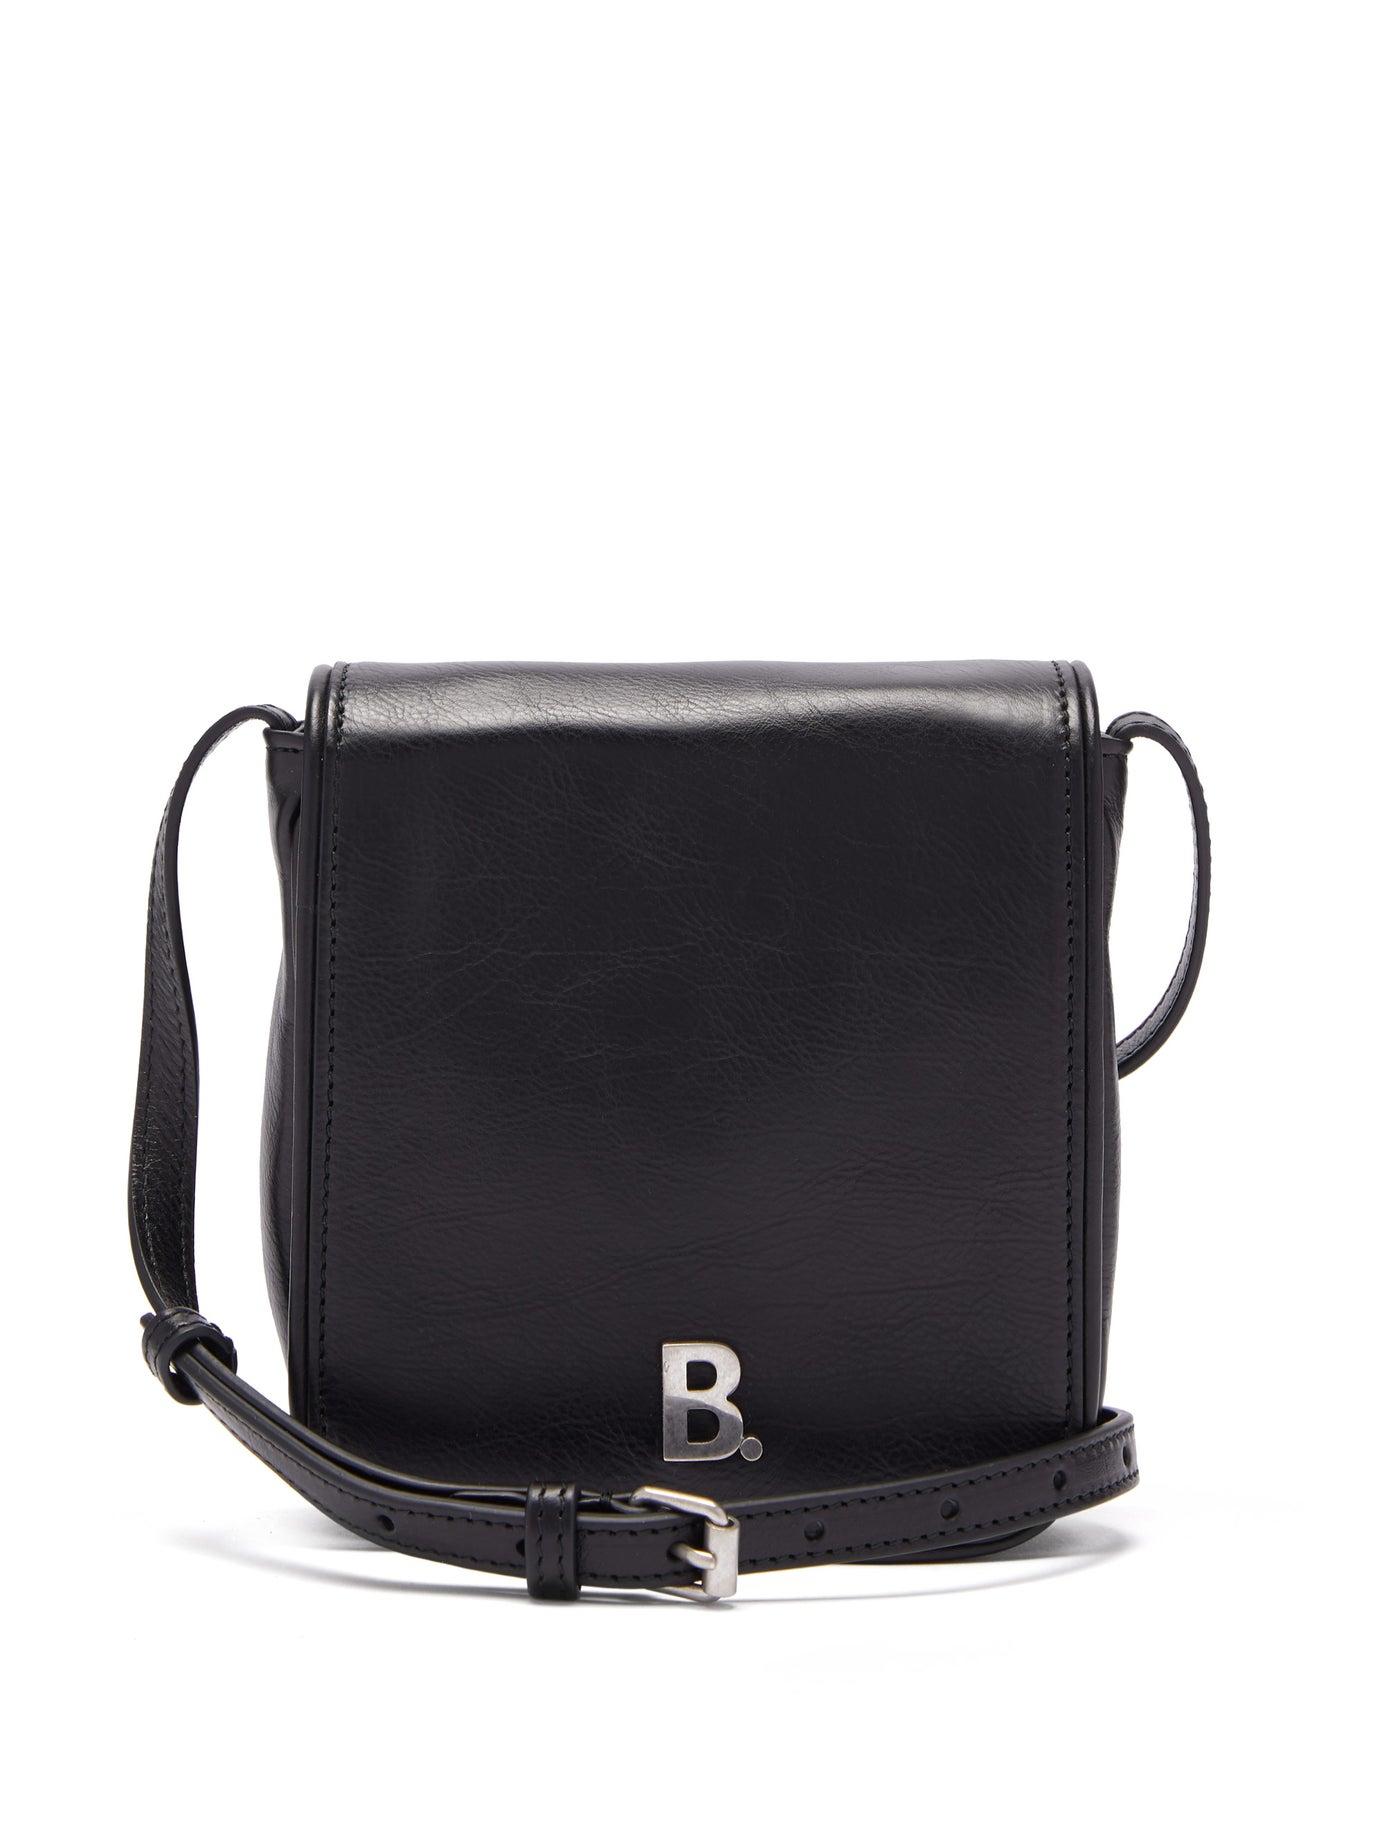 Balenciaga B Logo Leather Cross Body Bag in Black for Men - Lyst